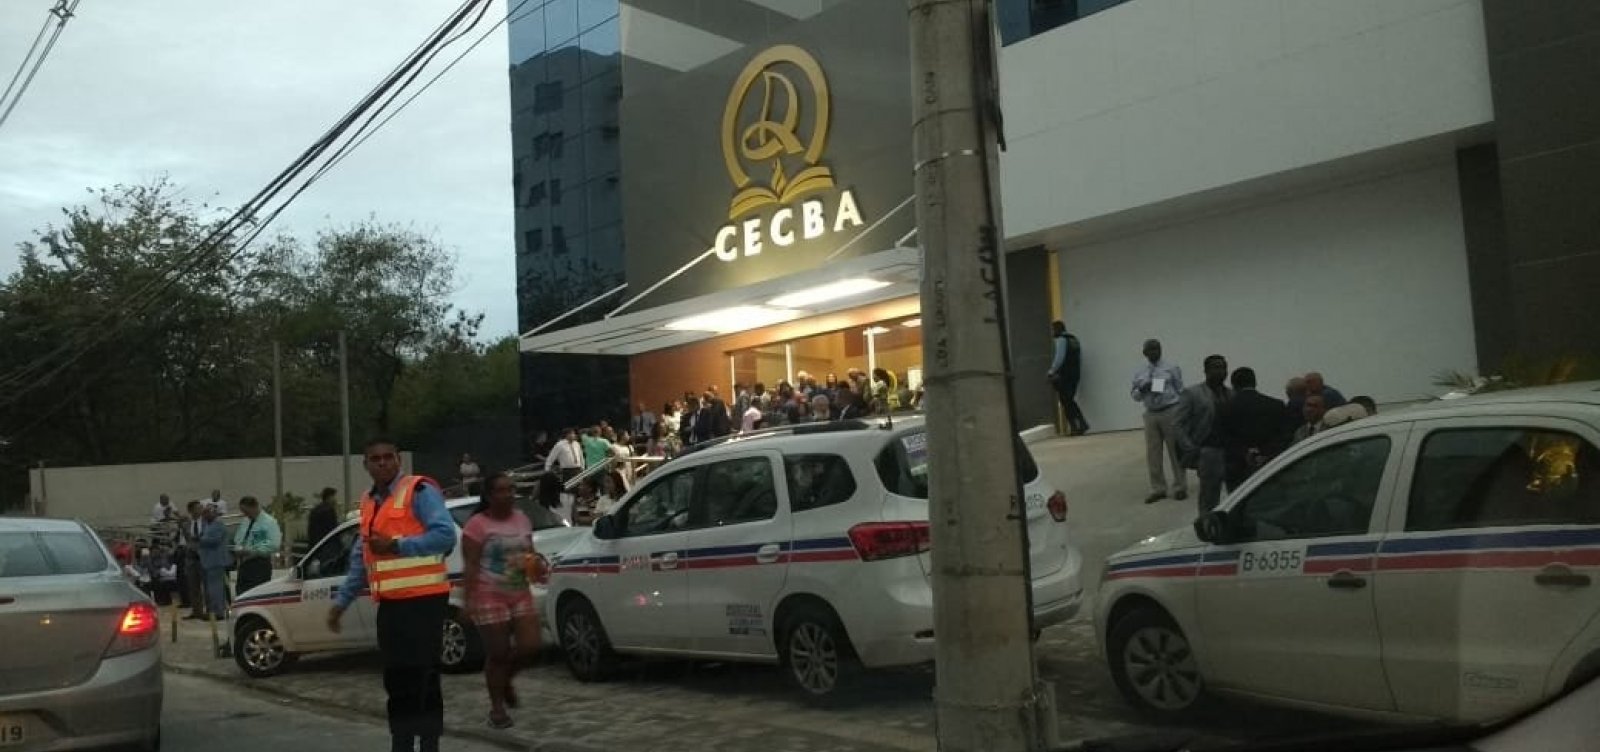 Igreja provoca engarrafamento no Costa Azul, denuncia leitor